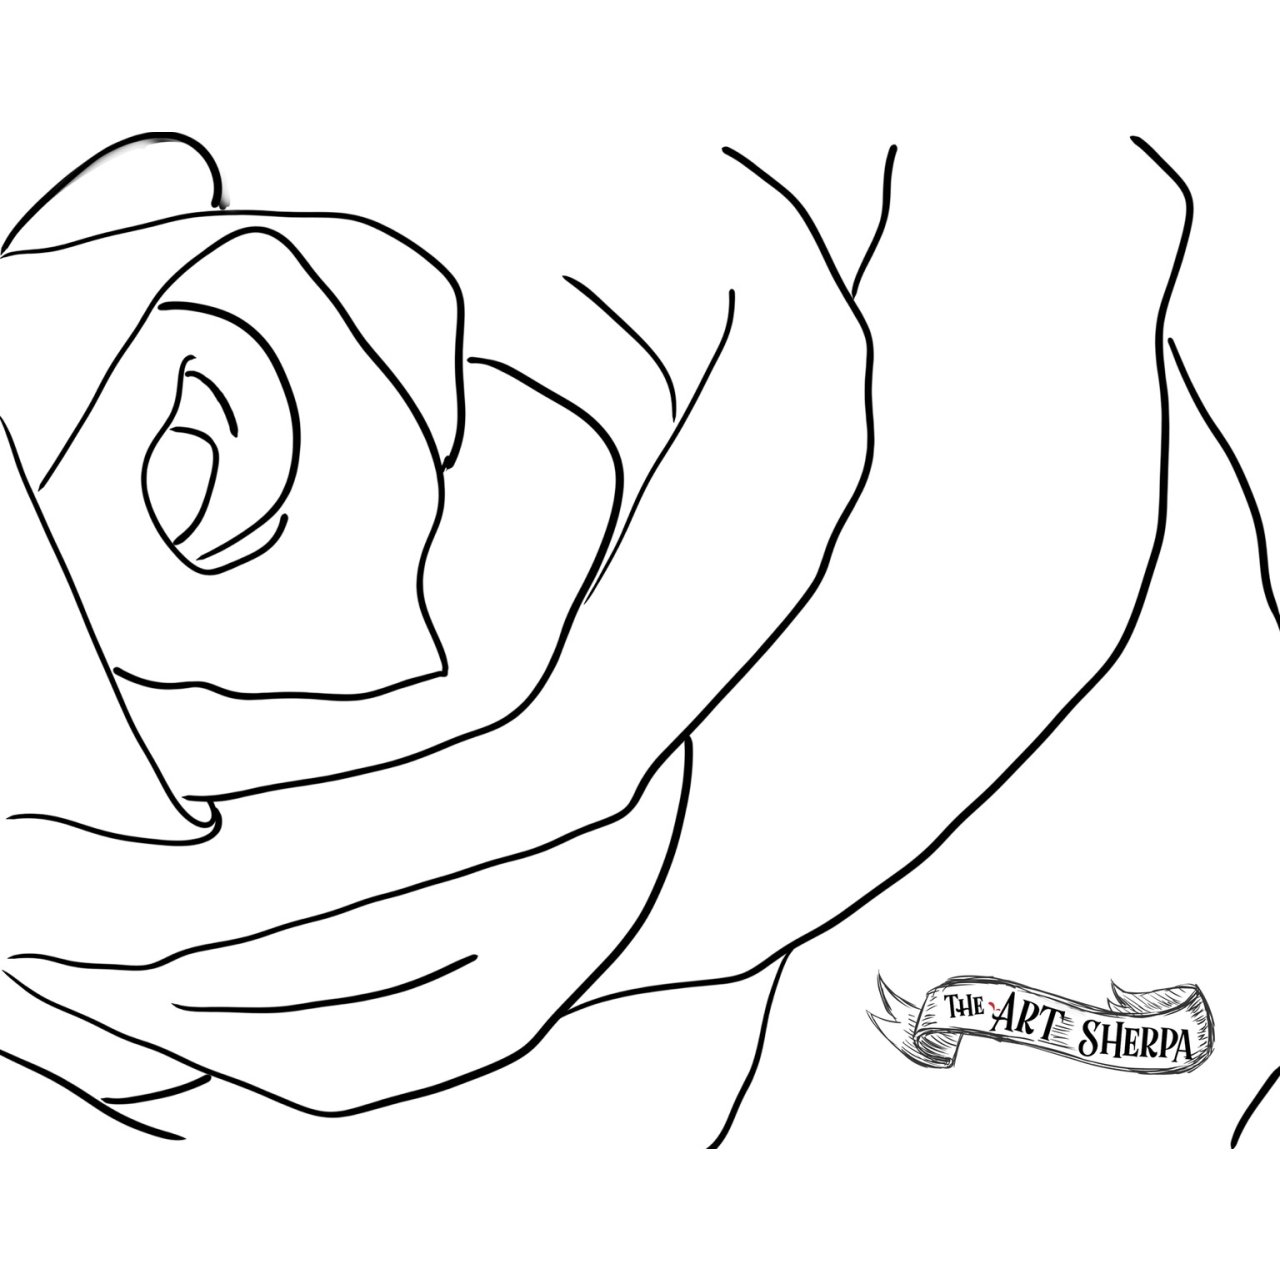 traceble rose .jpg